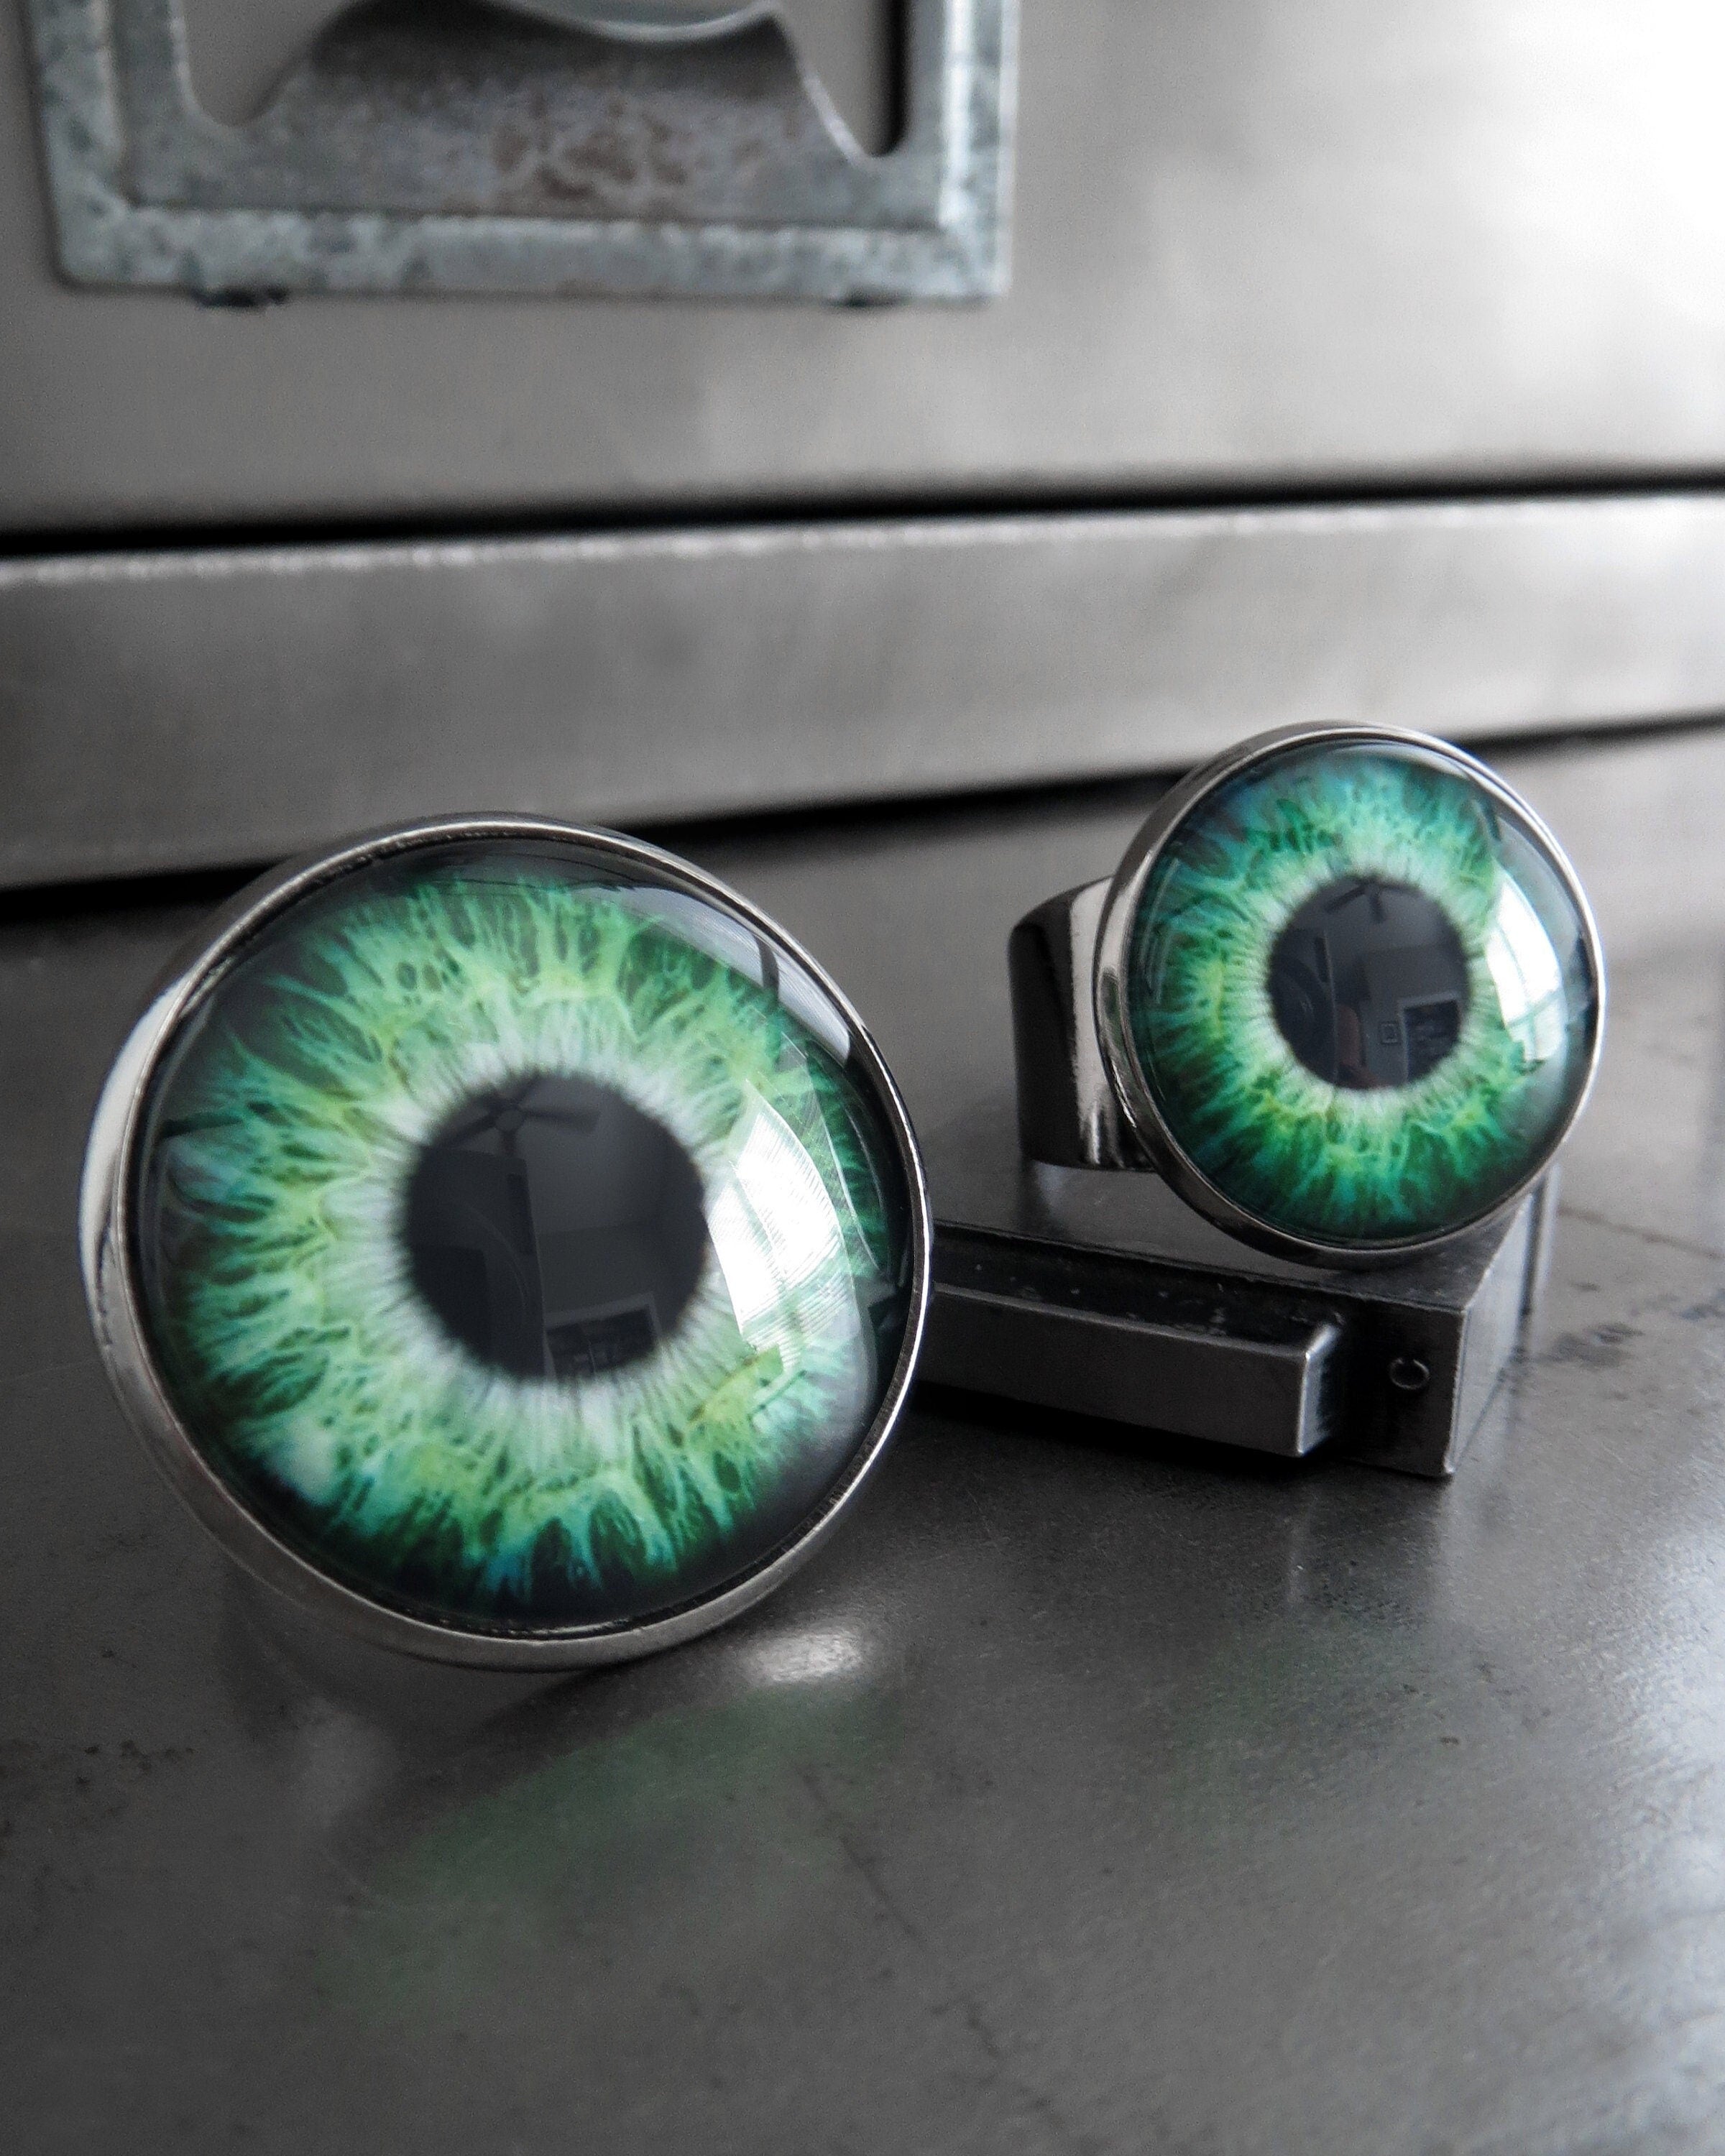 Monster Green Eyeball Ring - Two Sizes - Realistic Eye Ball Ring, Evil Eye Ring, Adjustable Black Ring Band - Goth Halloween Gift for Teen